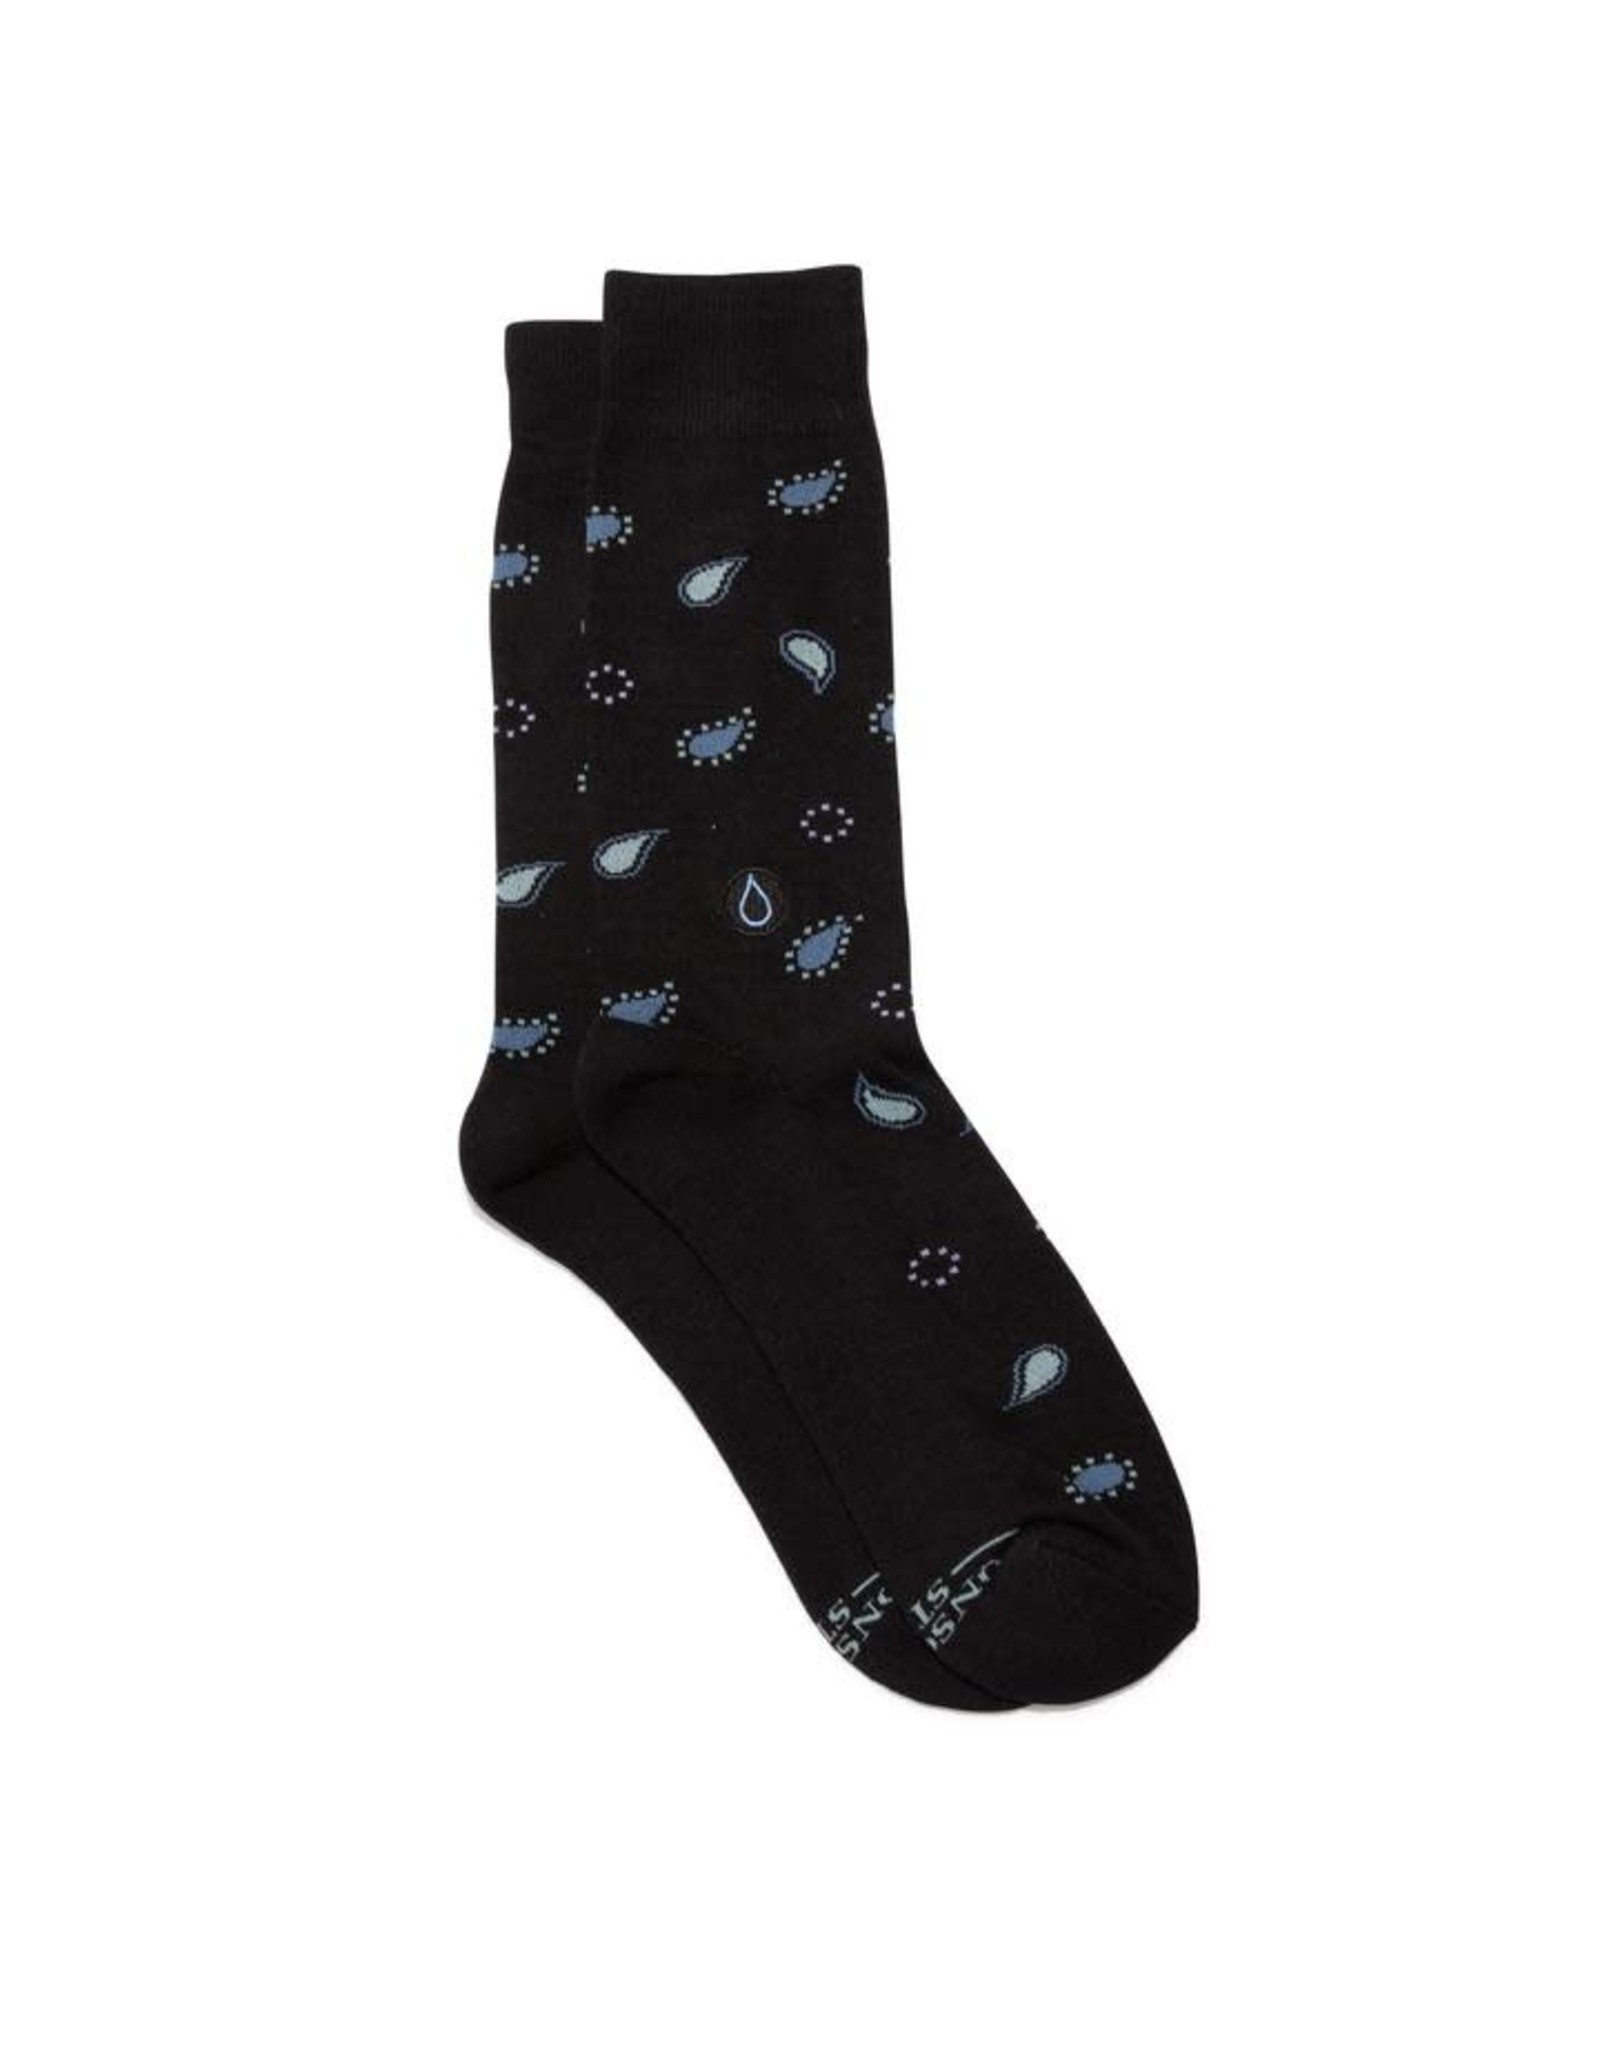 Socks that Give Water, Black w/ Water Drops